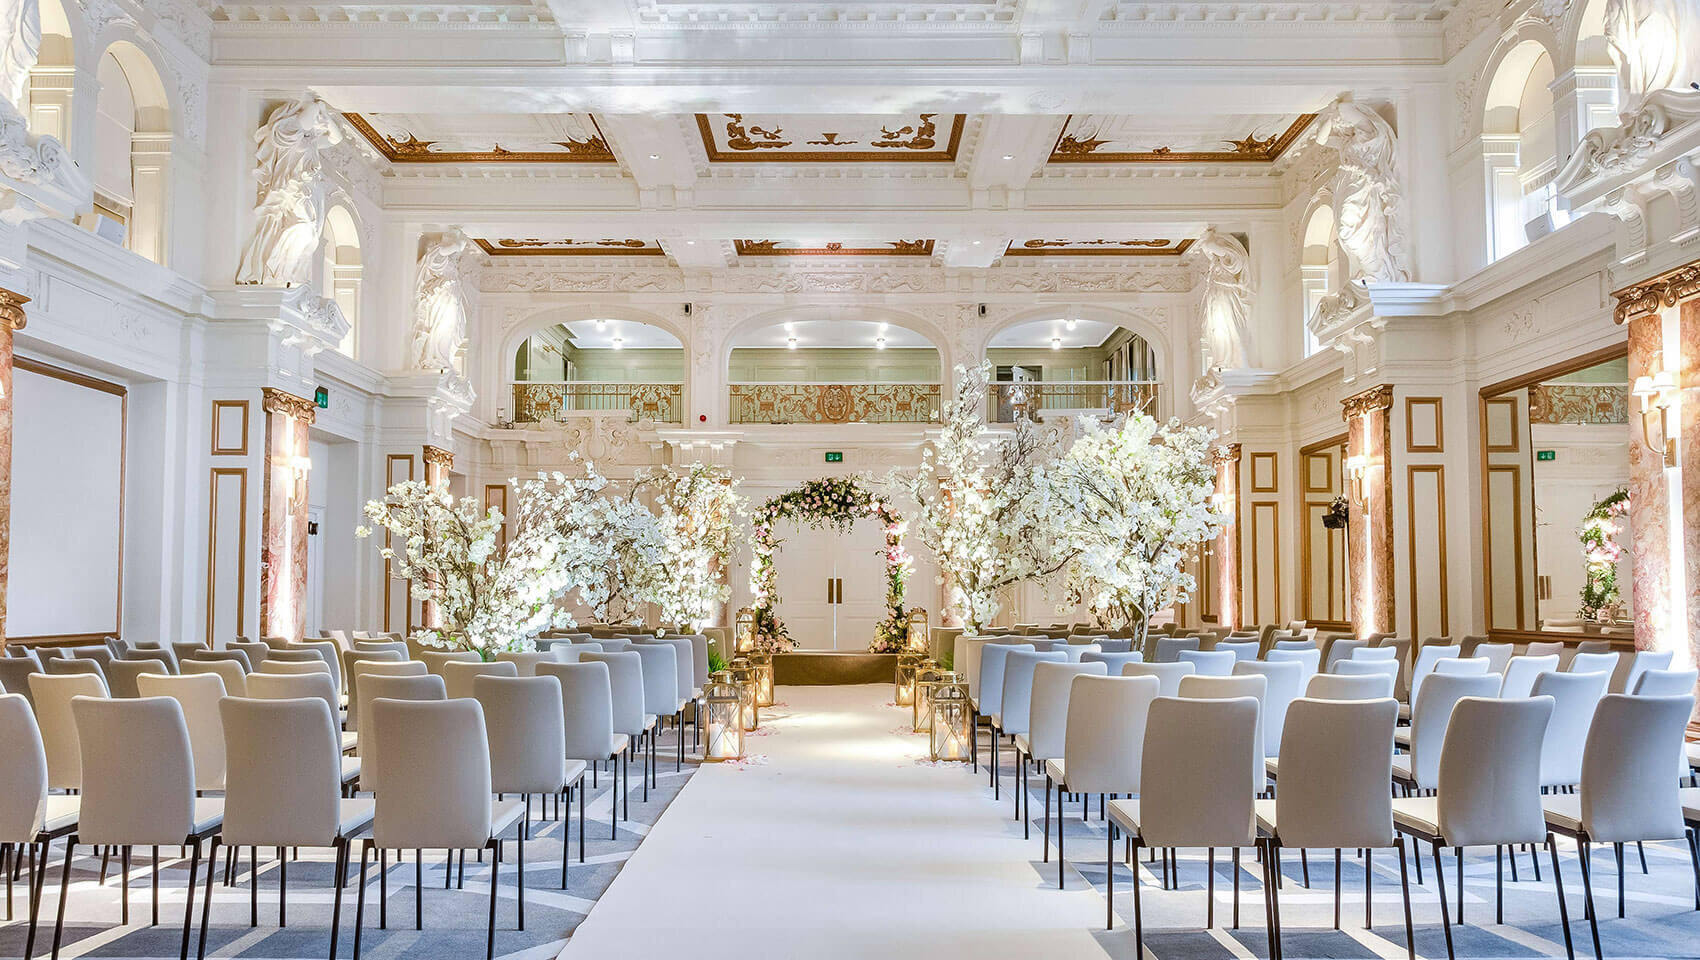 10 of Our Favorite Luxury Wedding Venues in the U.S.